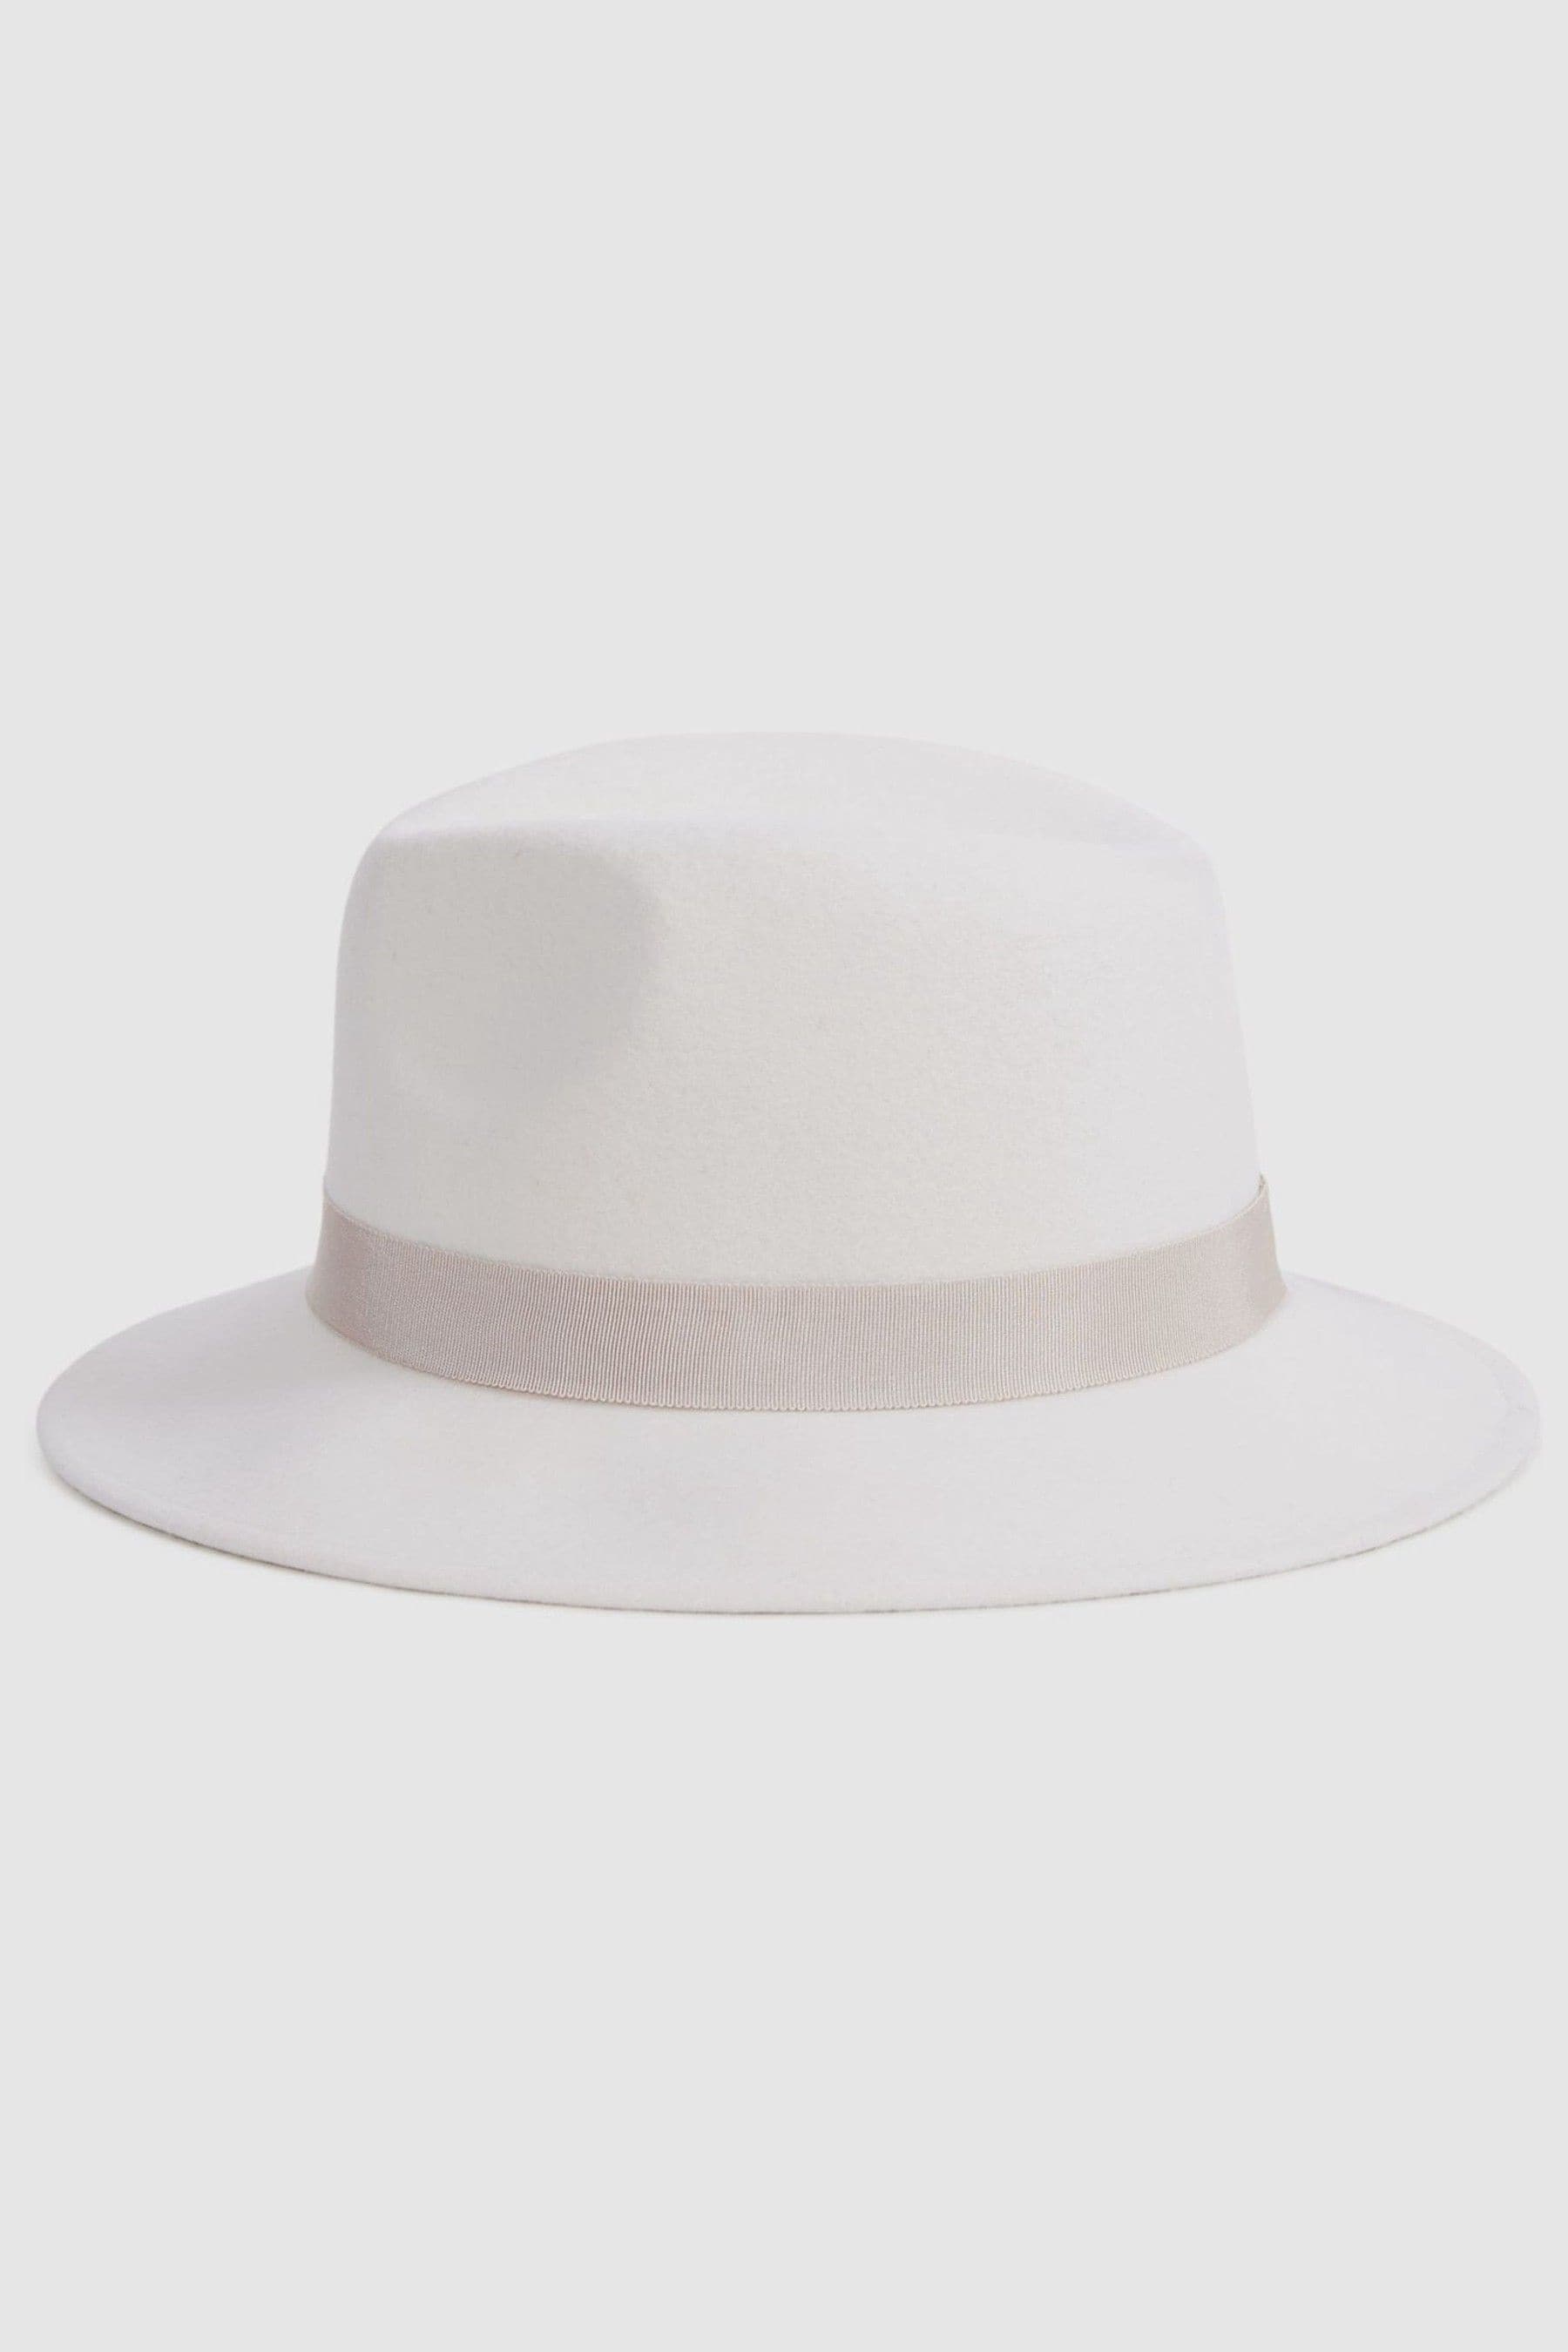 Ally - Ivory Wool Fedora Hat